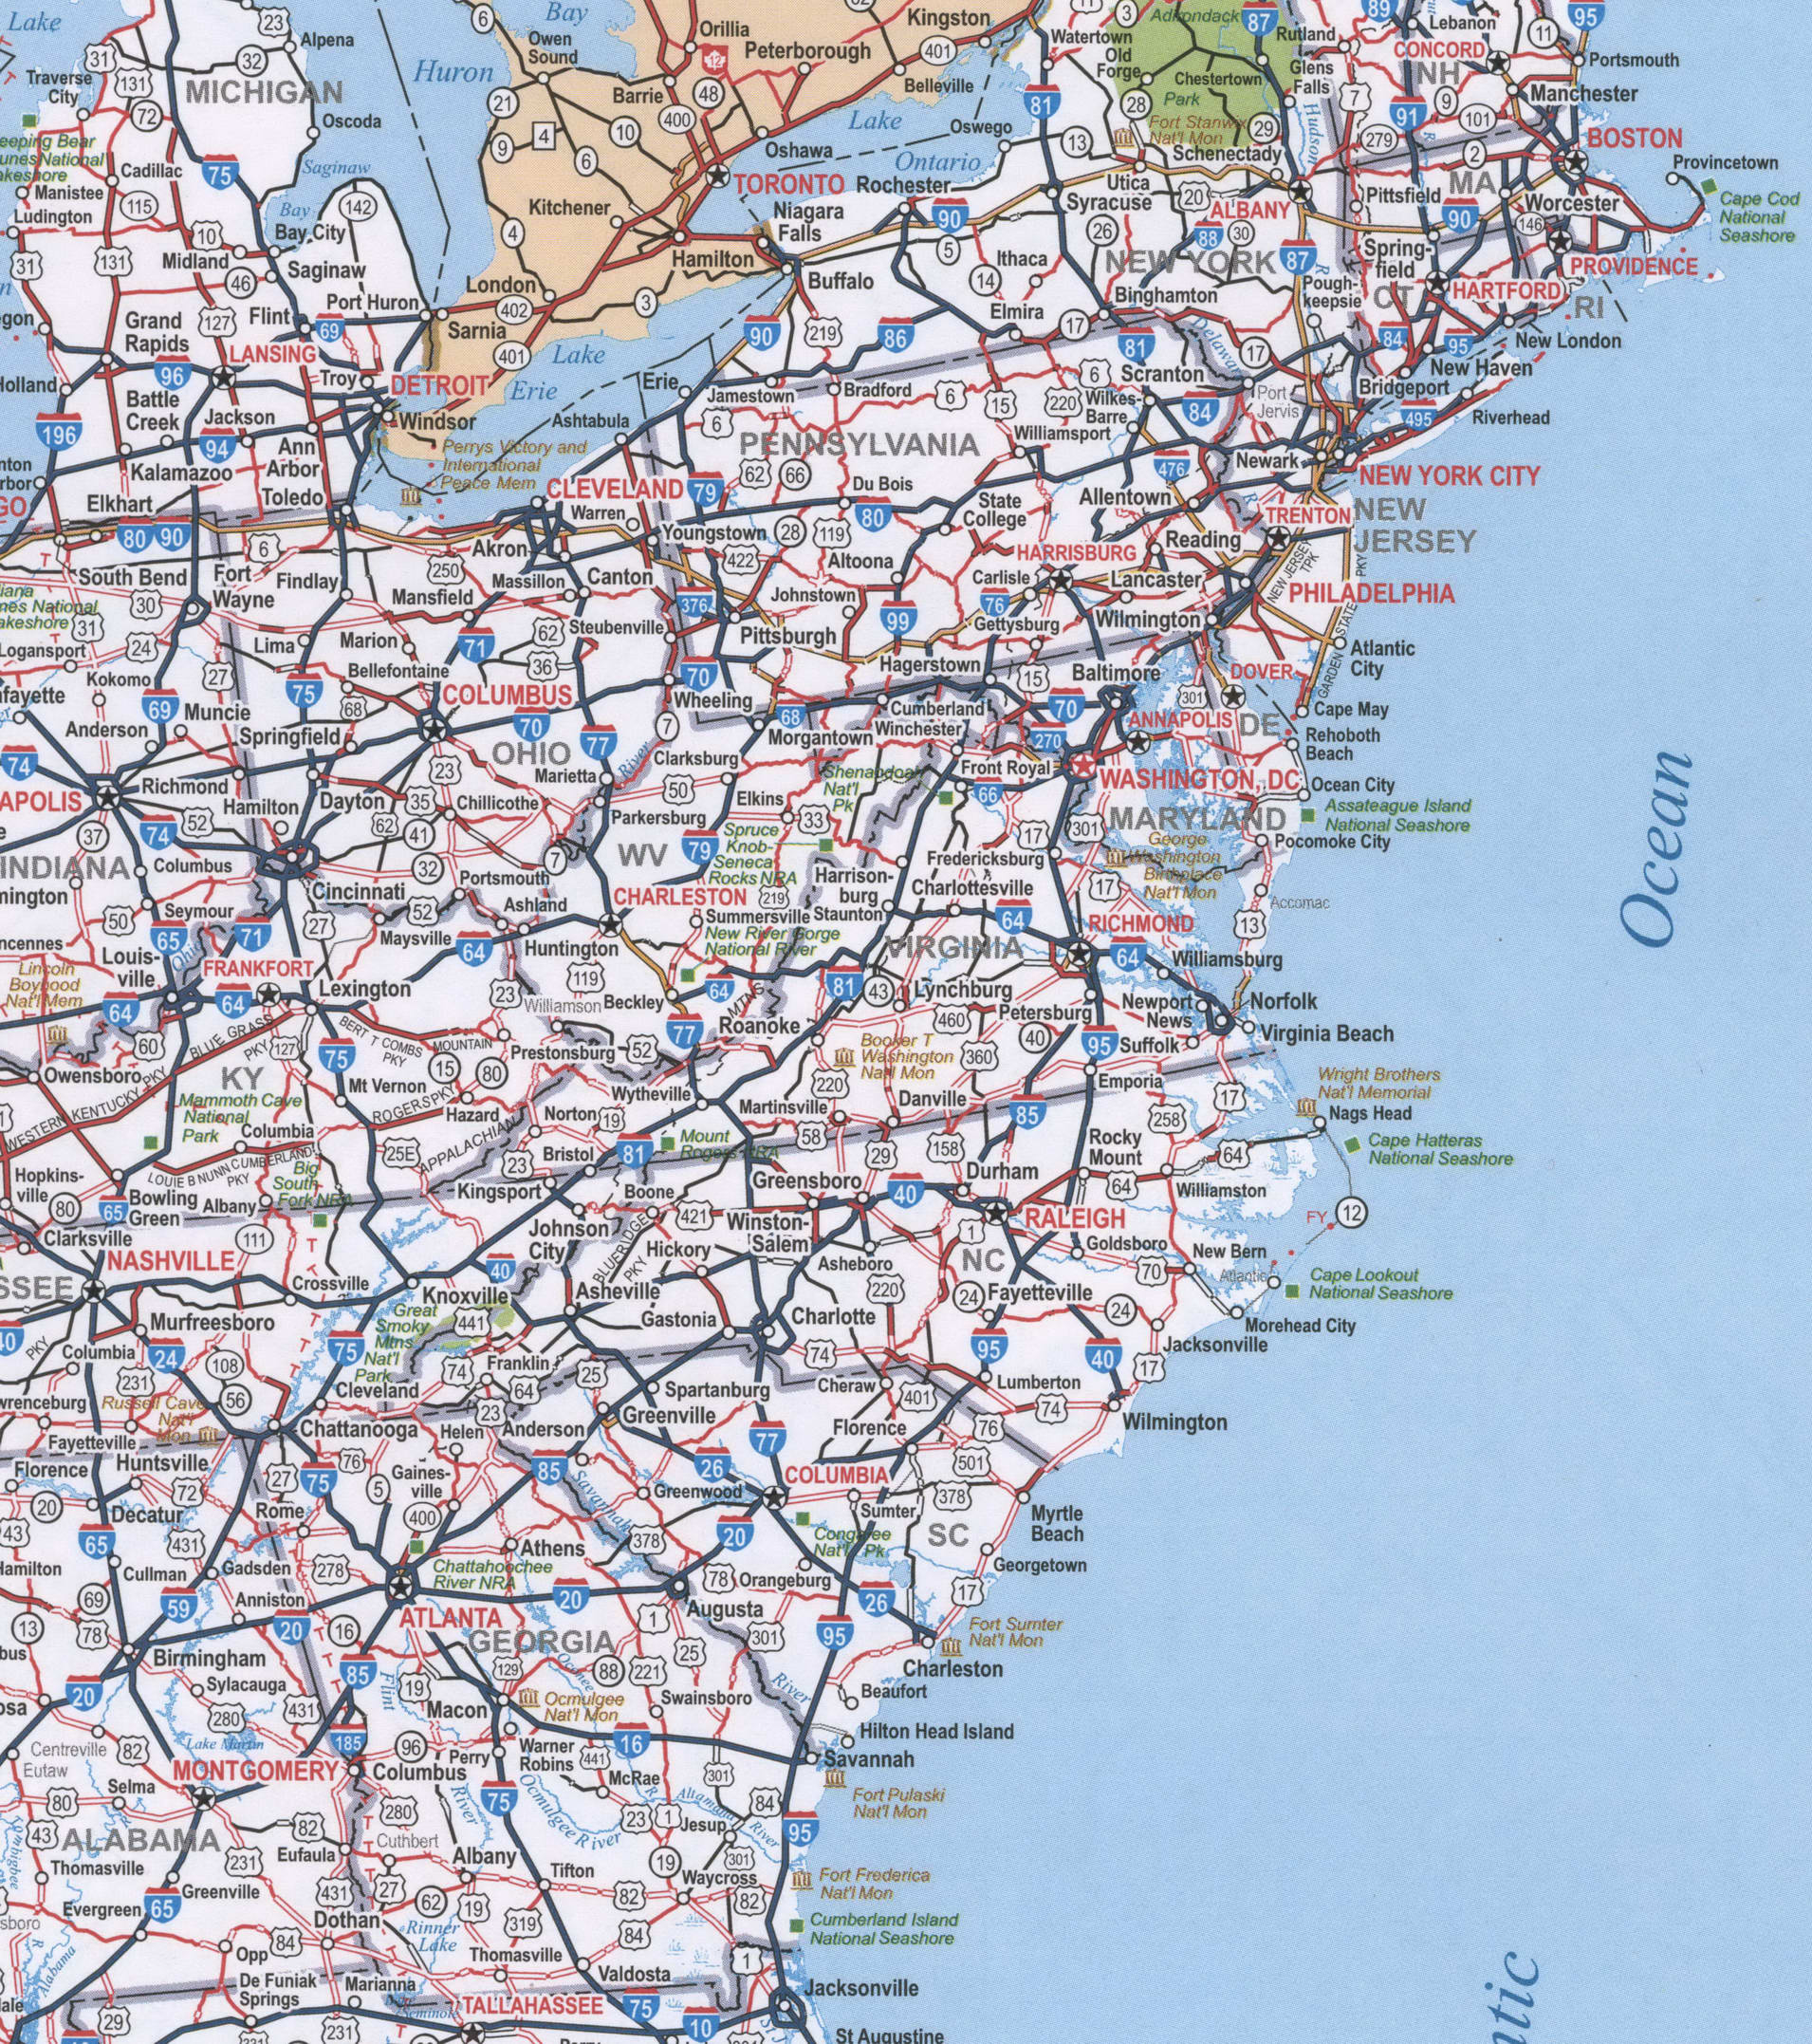 Map of MidAtlantic region USA